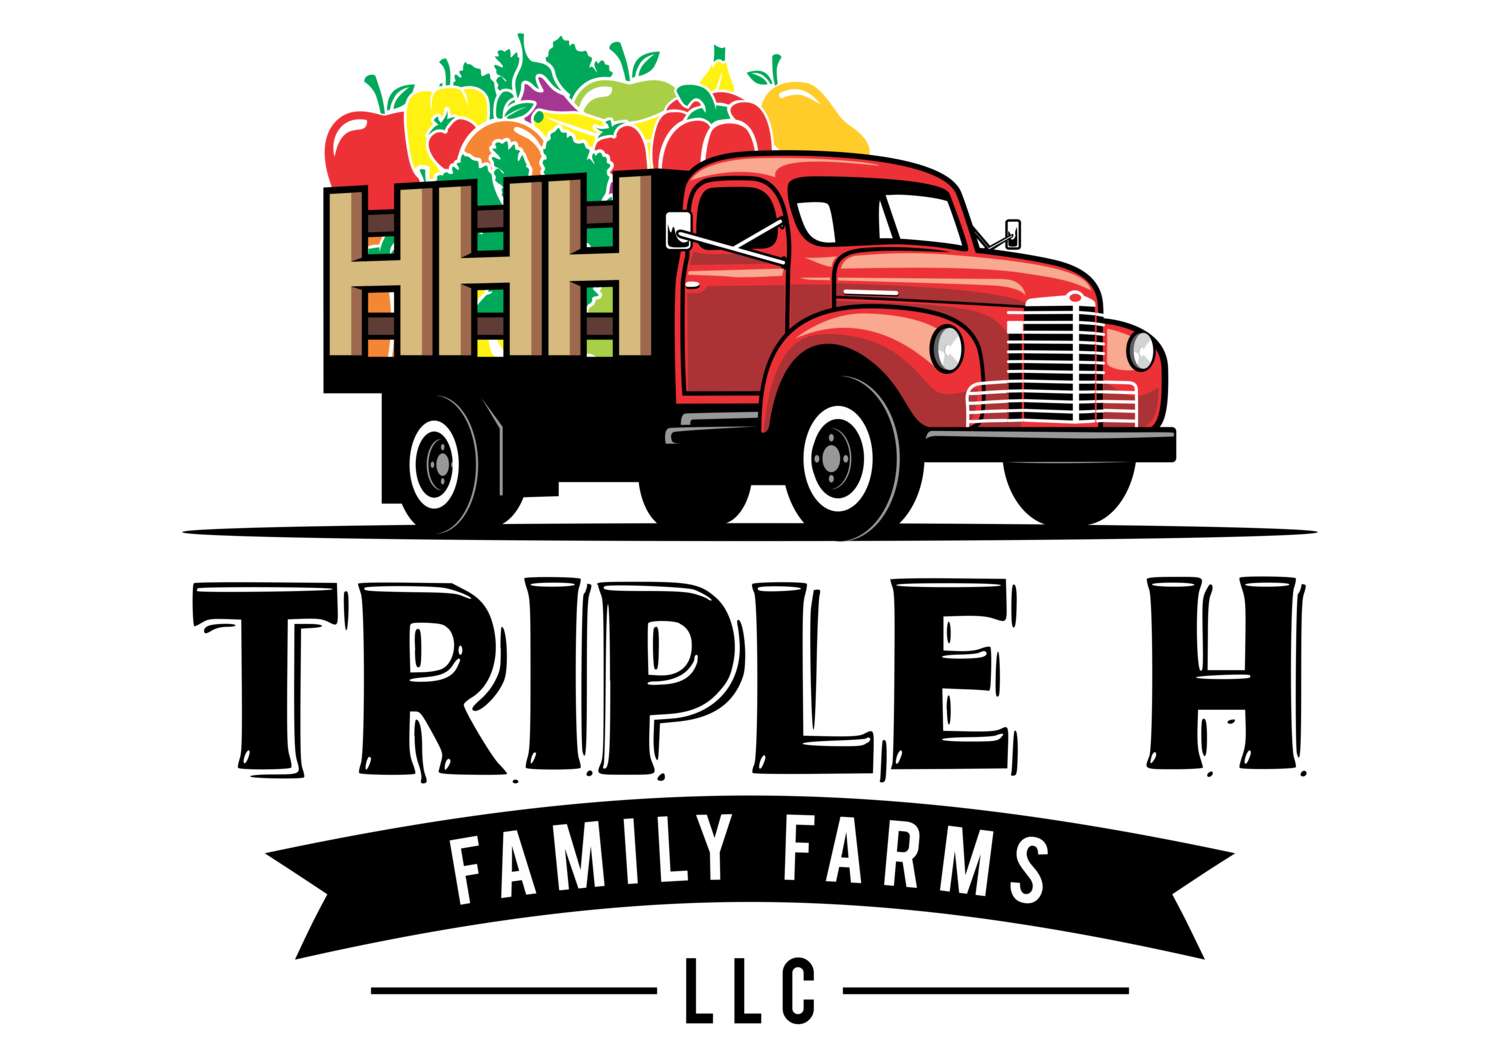 Triple H Family Farms, LLC